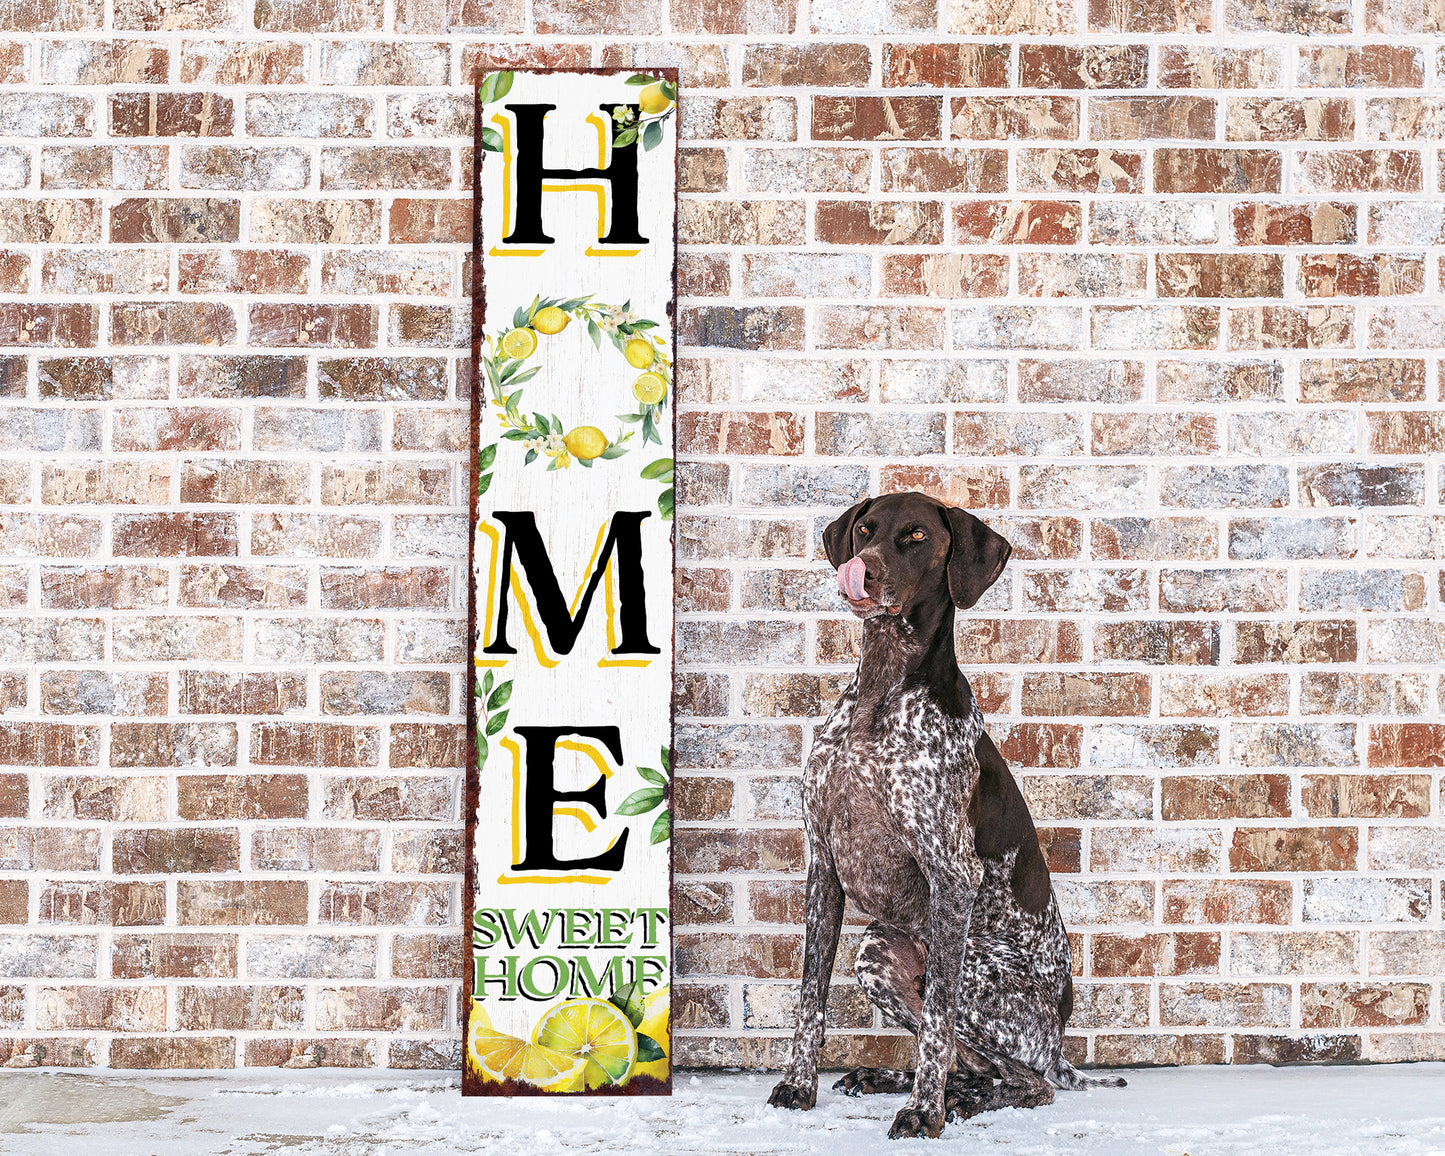 Lemon Home Sweet Home Sign | Rustic Wood Front Door Decor | Farmhouse Porch Sign Decorations | Patio Decor | Wooden Decor